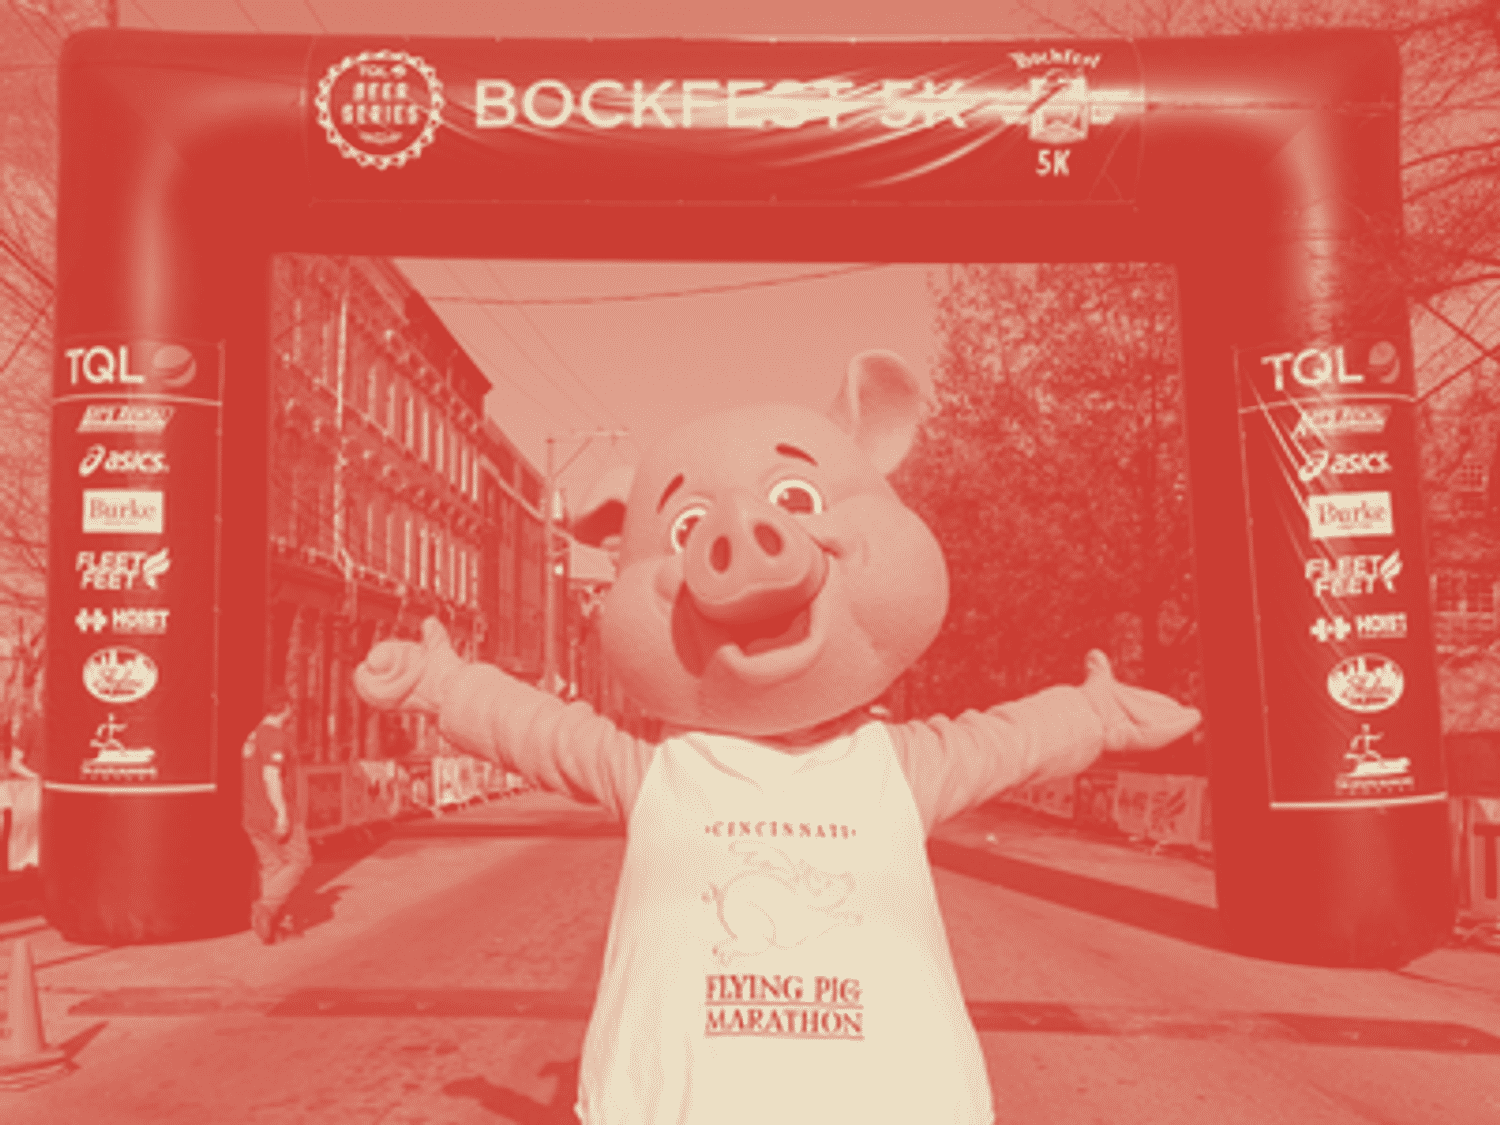 Bockfest and Pig Works: Celebrating Cincinnati